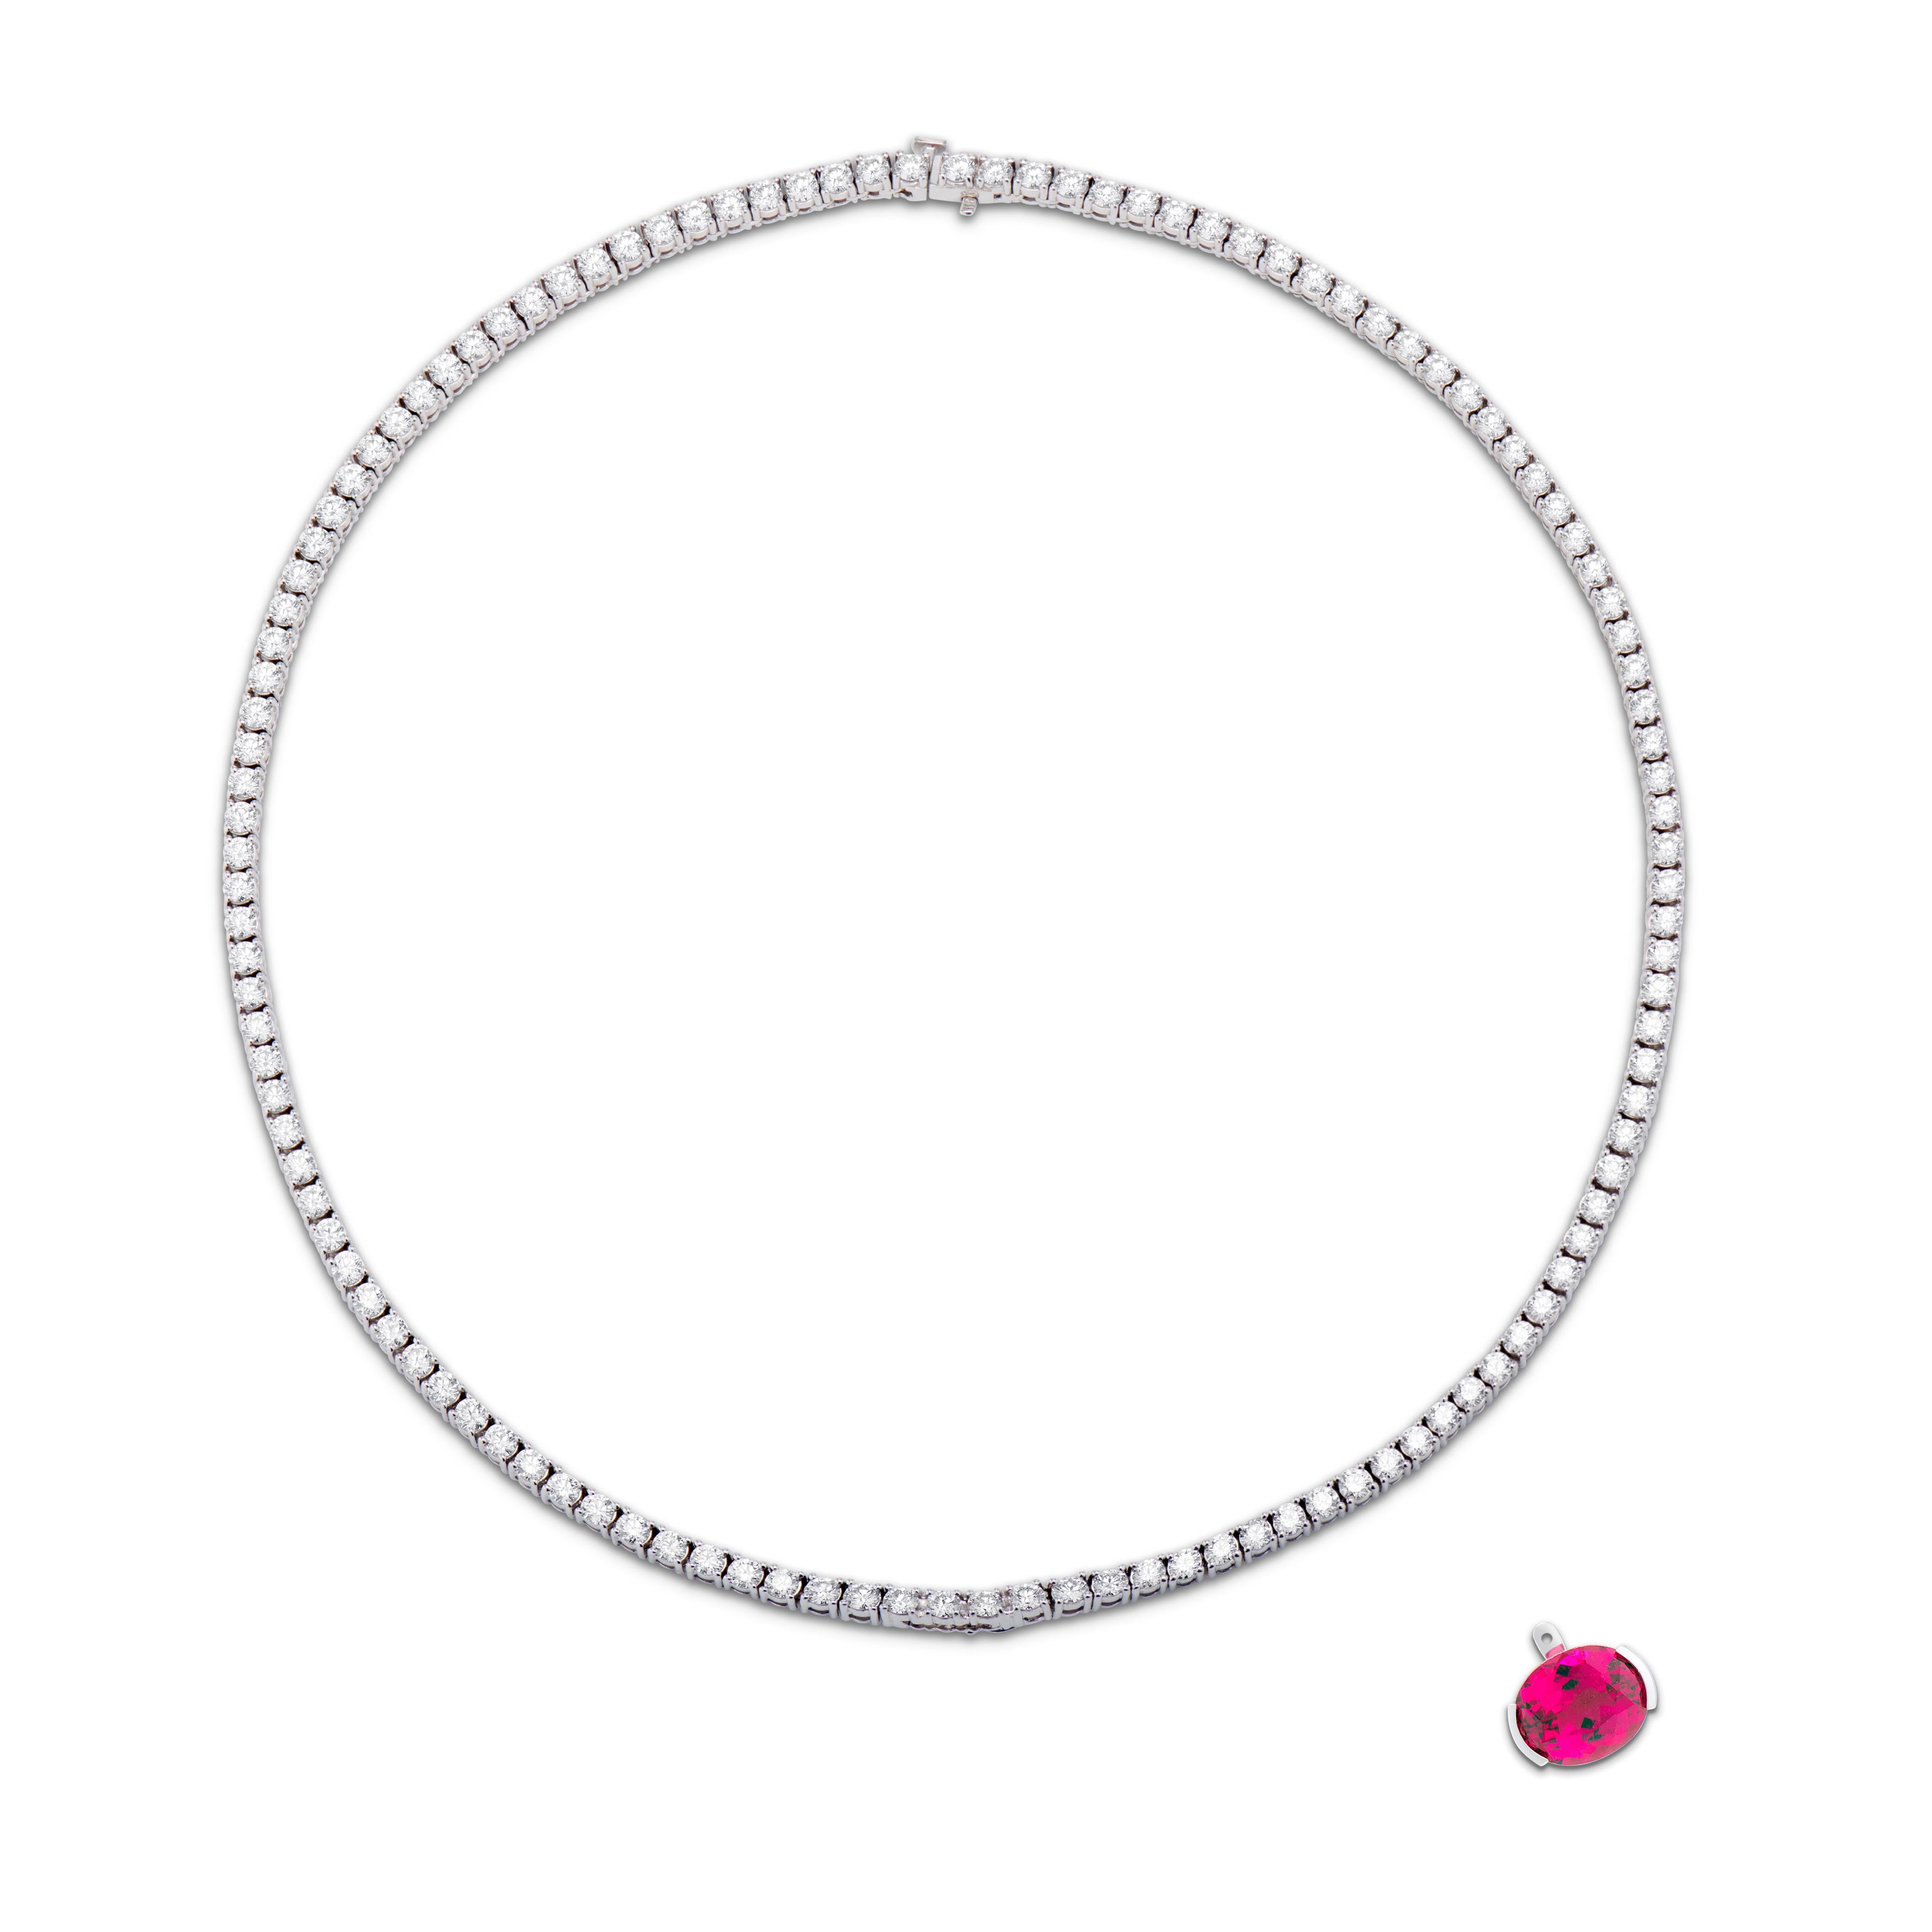 Oval Cut Diamond Tennis Necklace with Detachable 4.11 Carat Rubellite Tourmaline Pendant For Sale